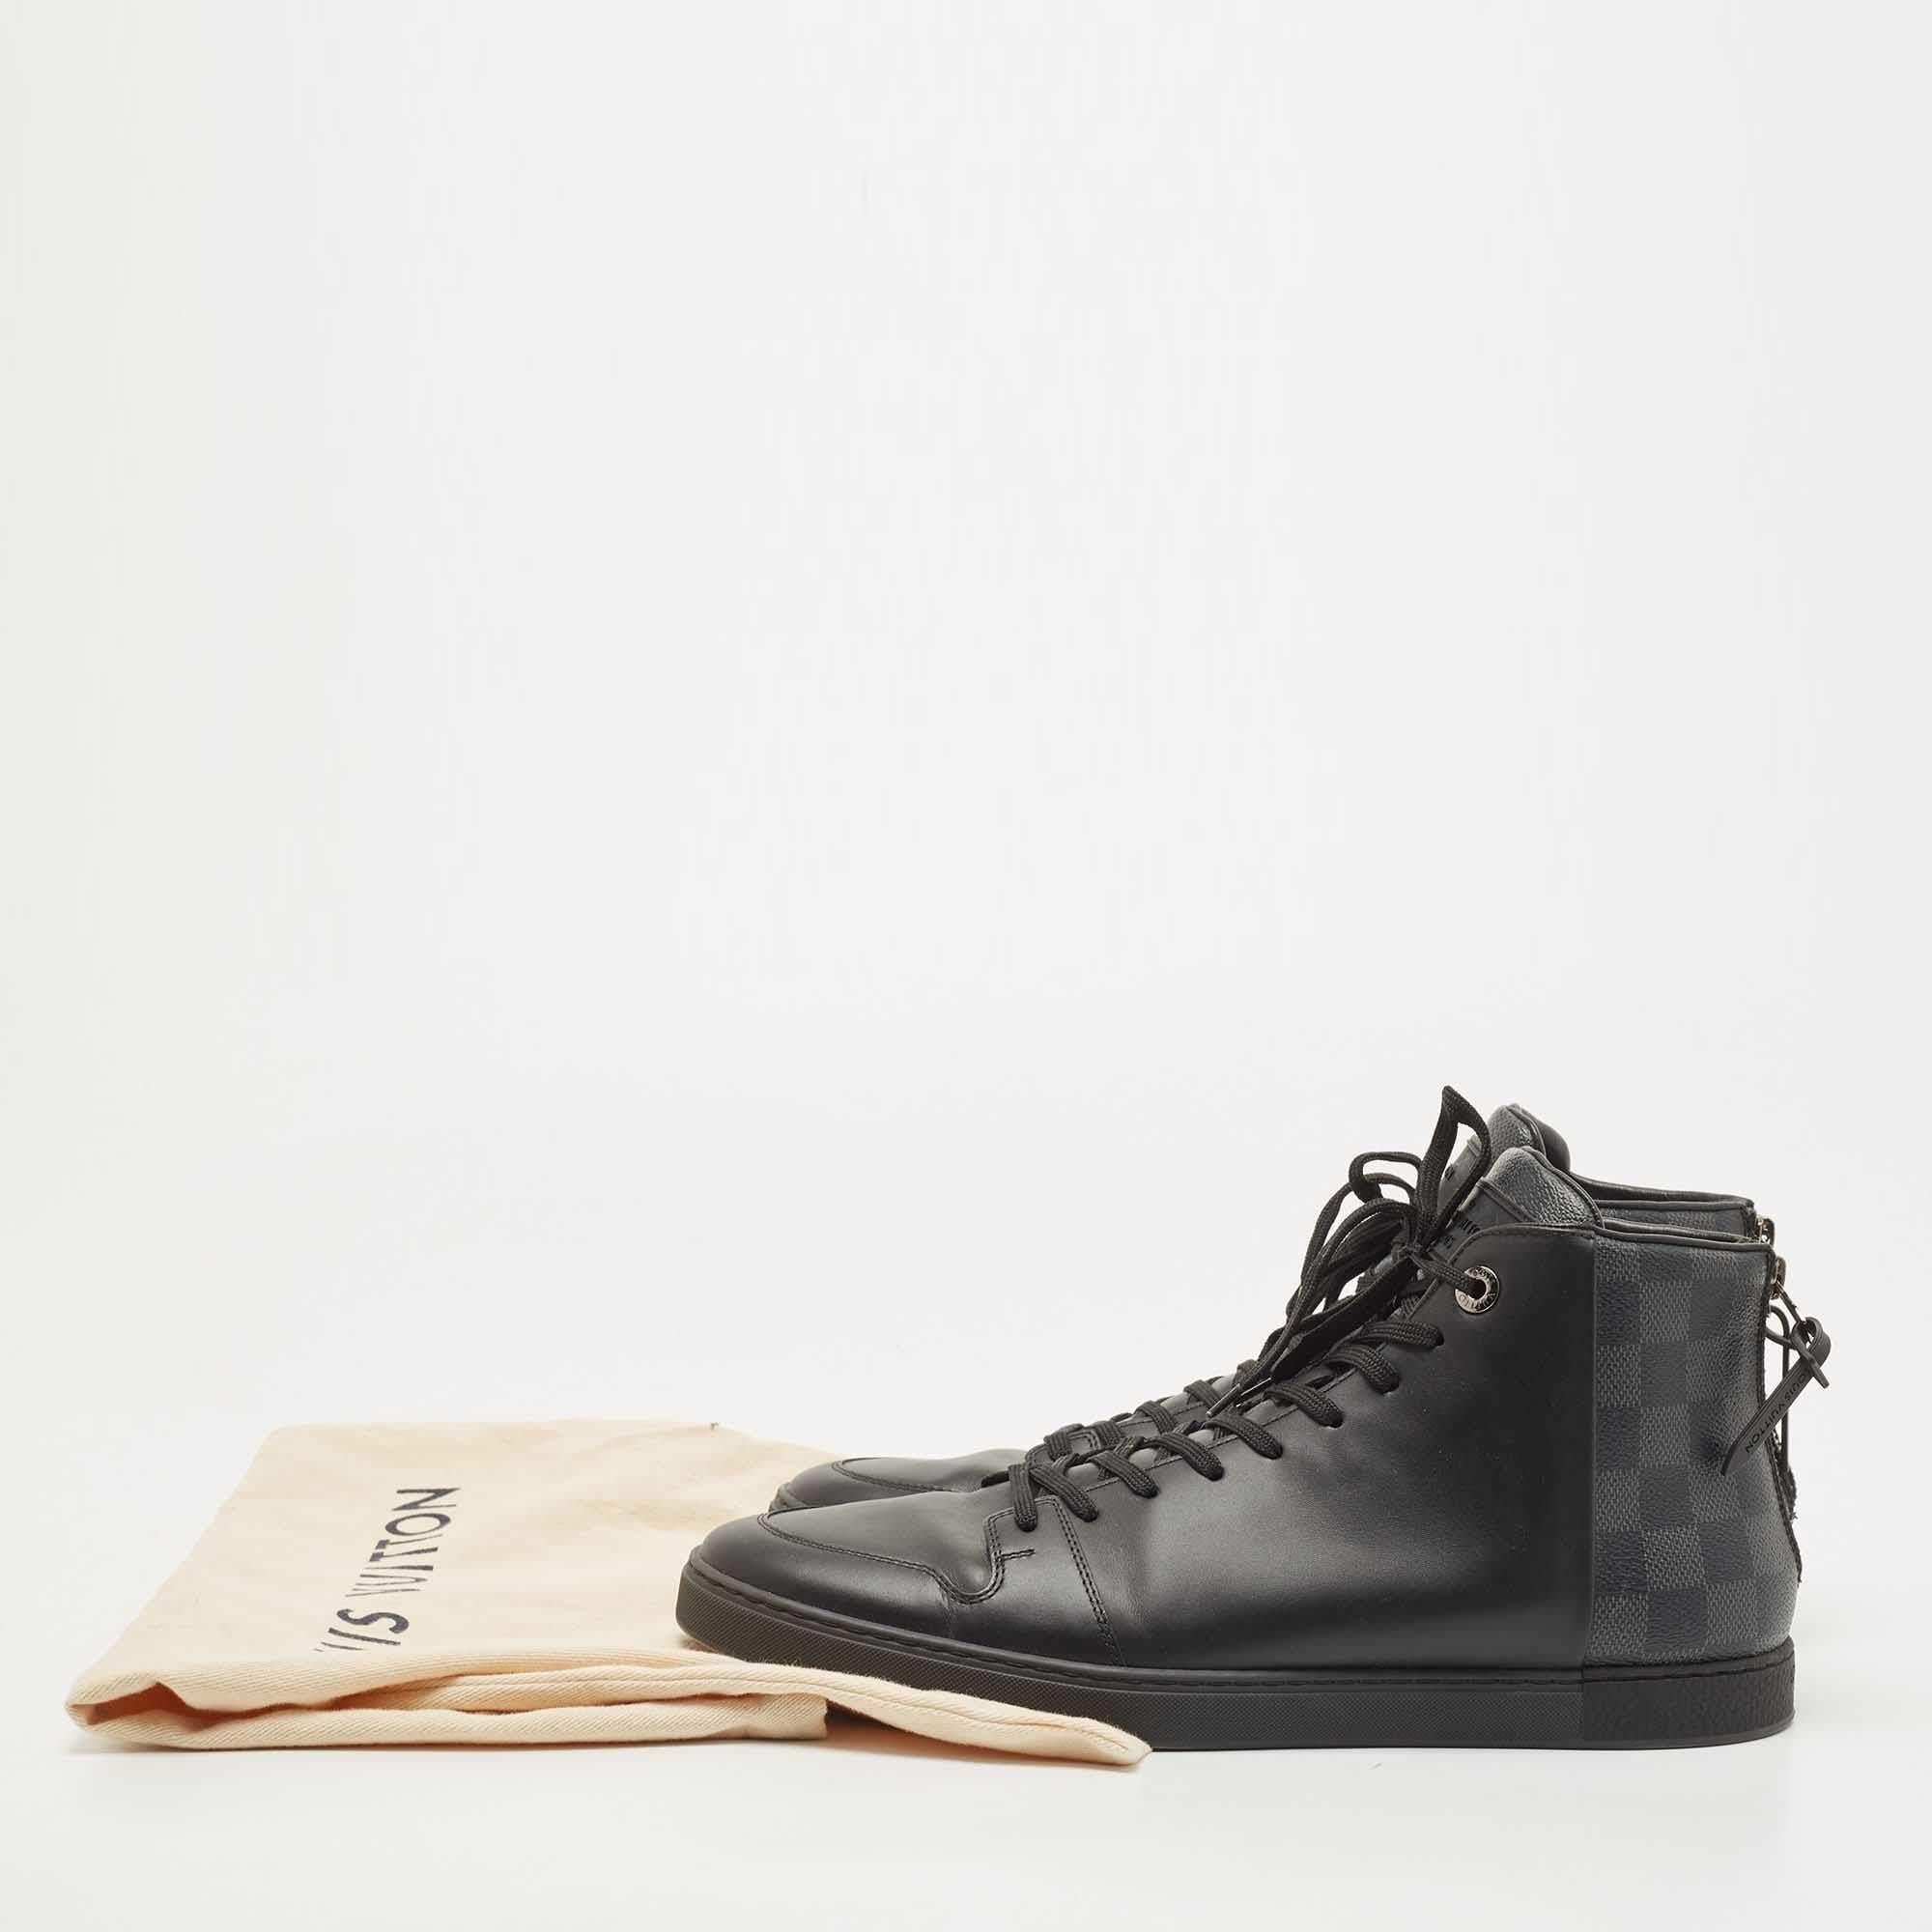 Louis Vuitton Black Leather Damier Graphite Canvas Line Up Sneakers Size 42.5 4